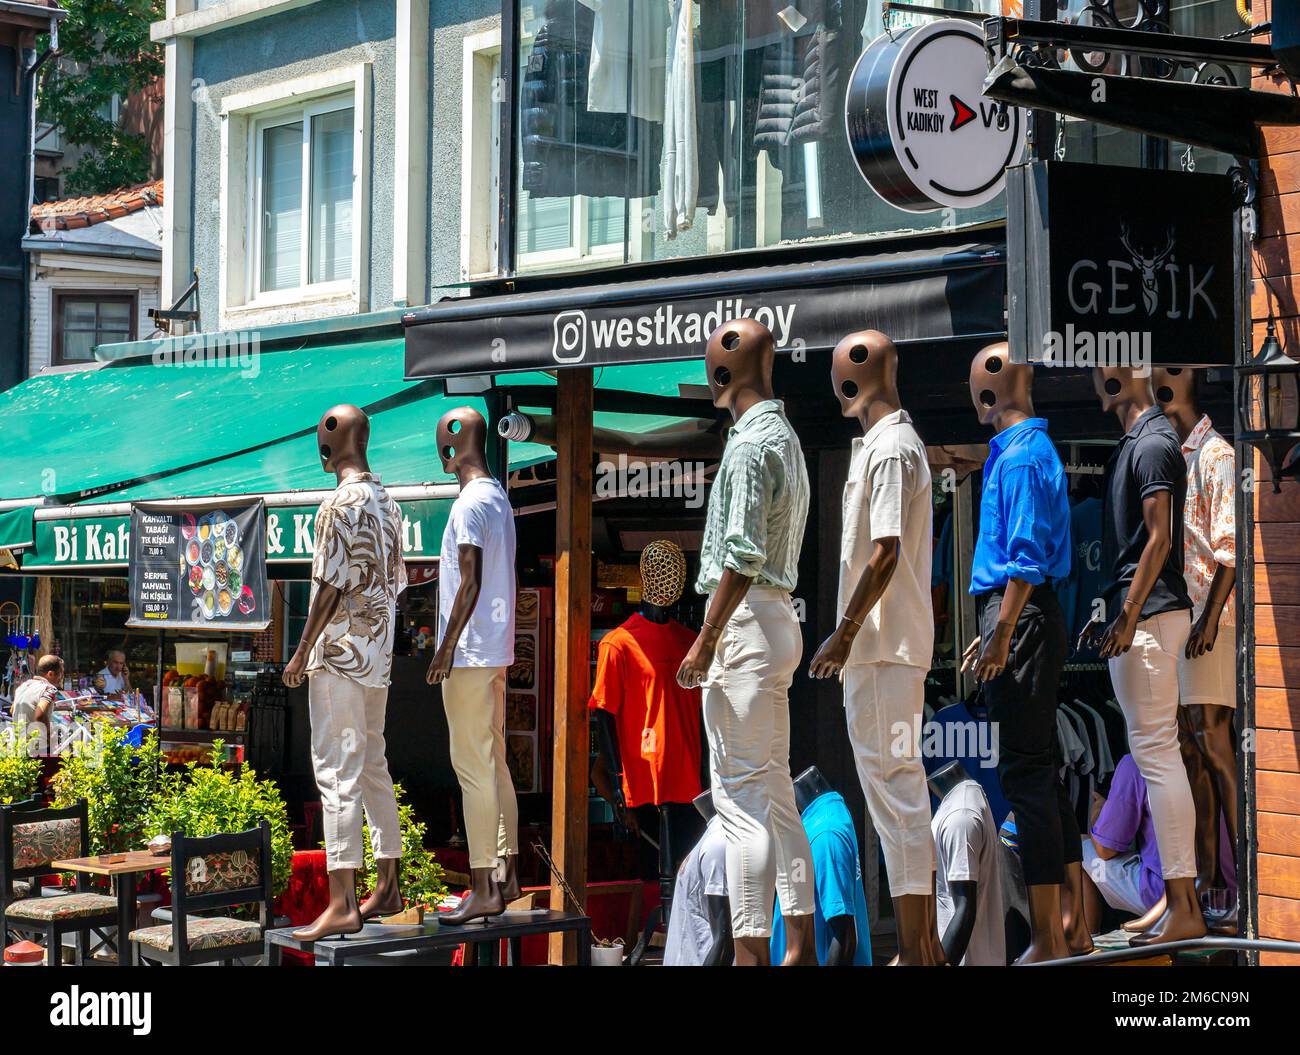 Mannequins with holes in their head sets dressed in modern clothing, street wear. Street shop Westkadikoy in Kadikoy, Istanbul, Turkey Stock Photo